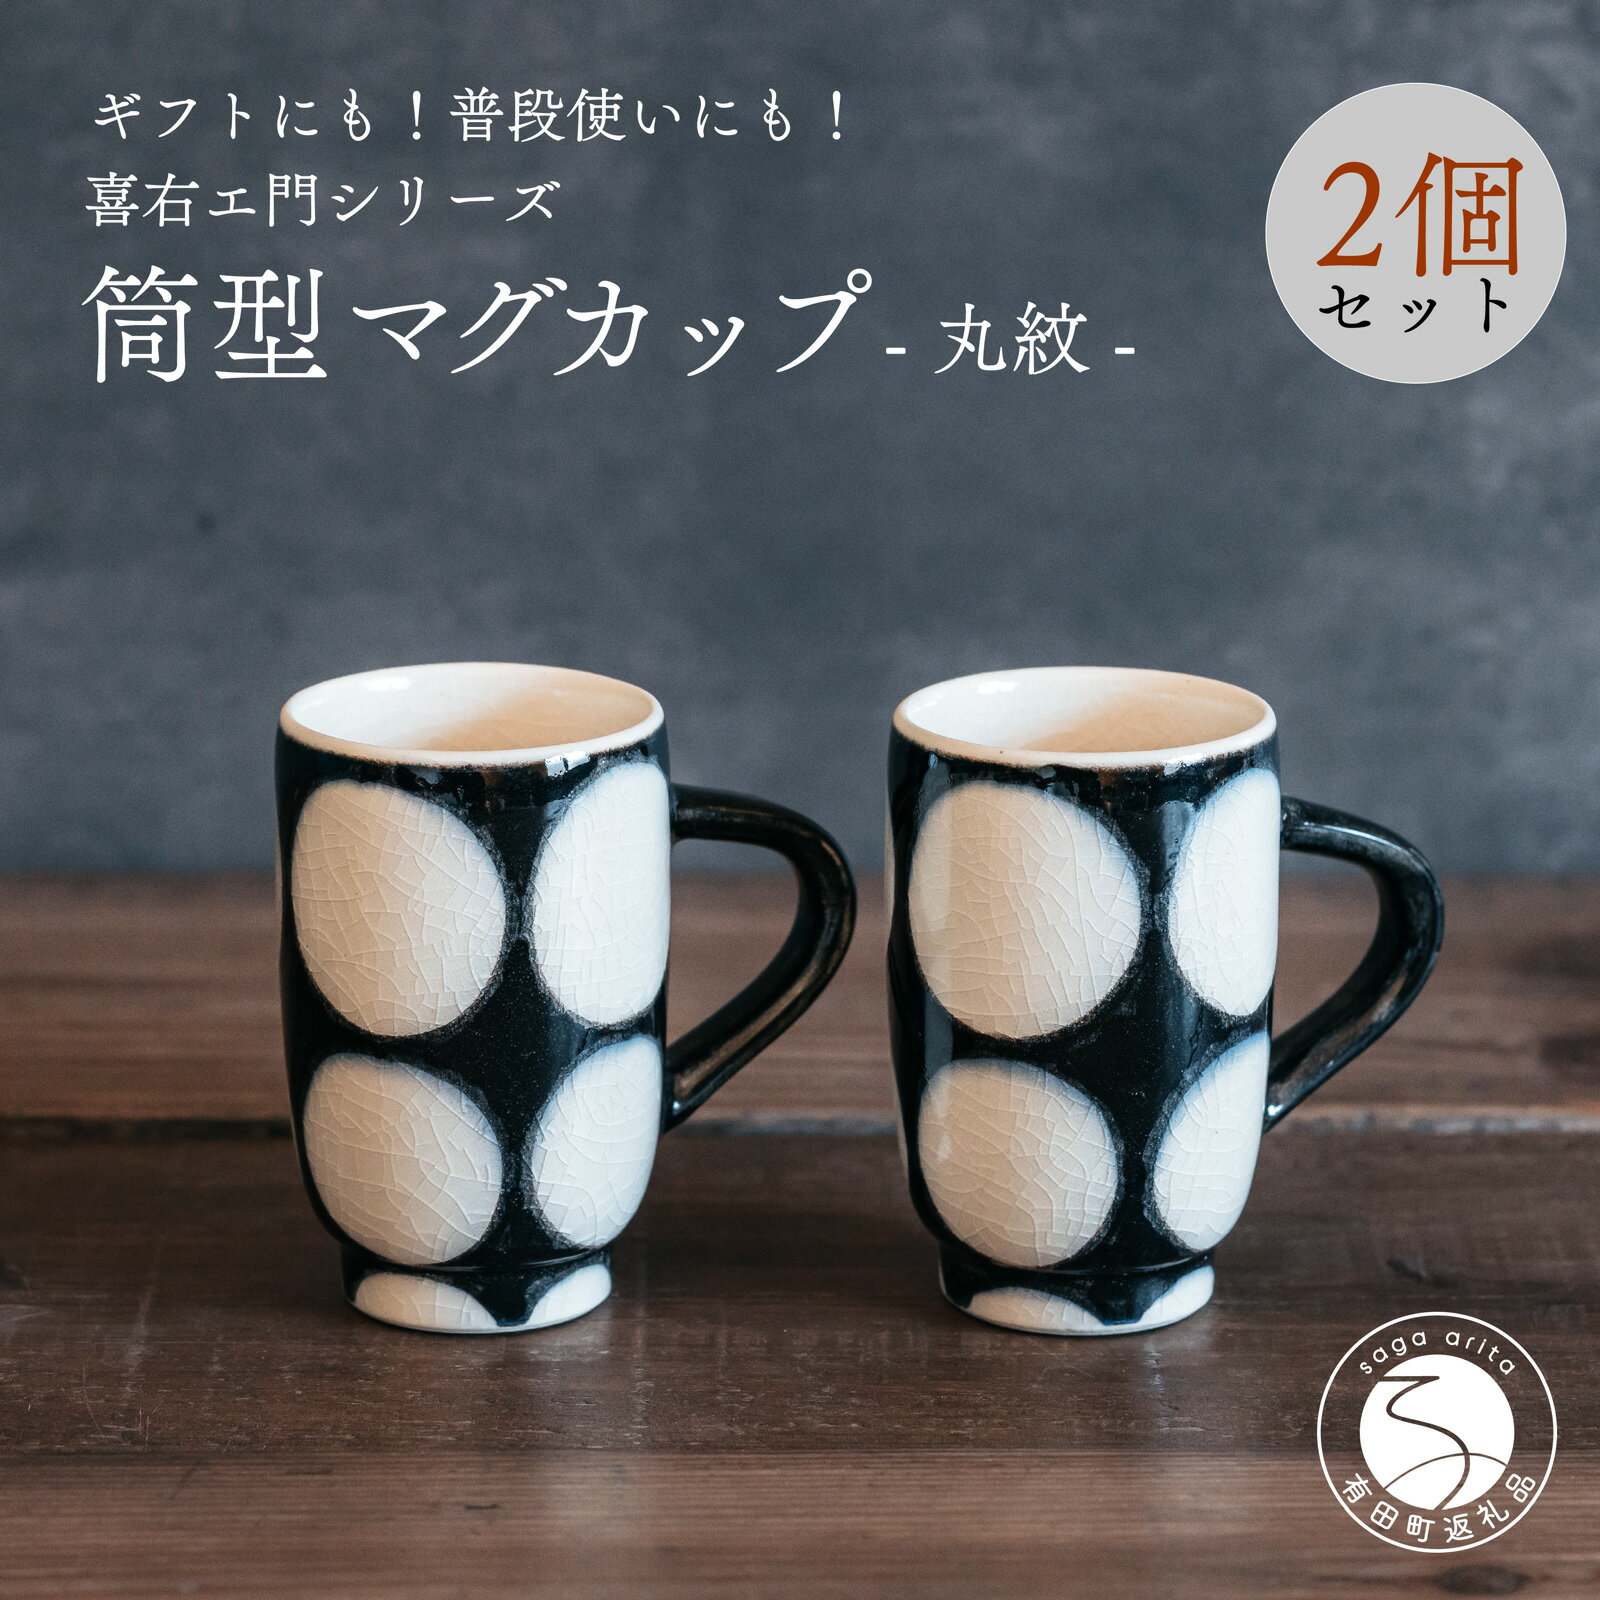 A30-410喜鶴製陶[有田焼]筒型マグカップ 丸紋 ペアセット 喜右エ門シリーズ